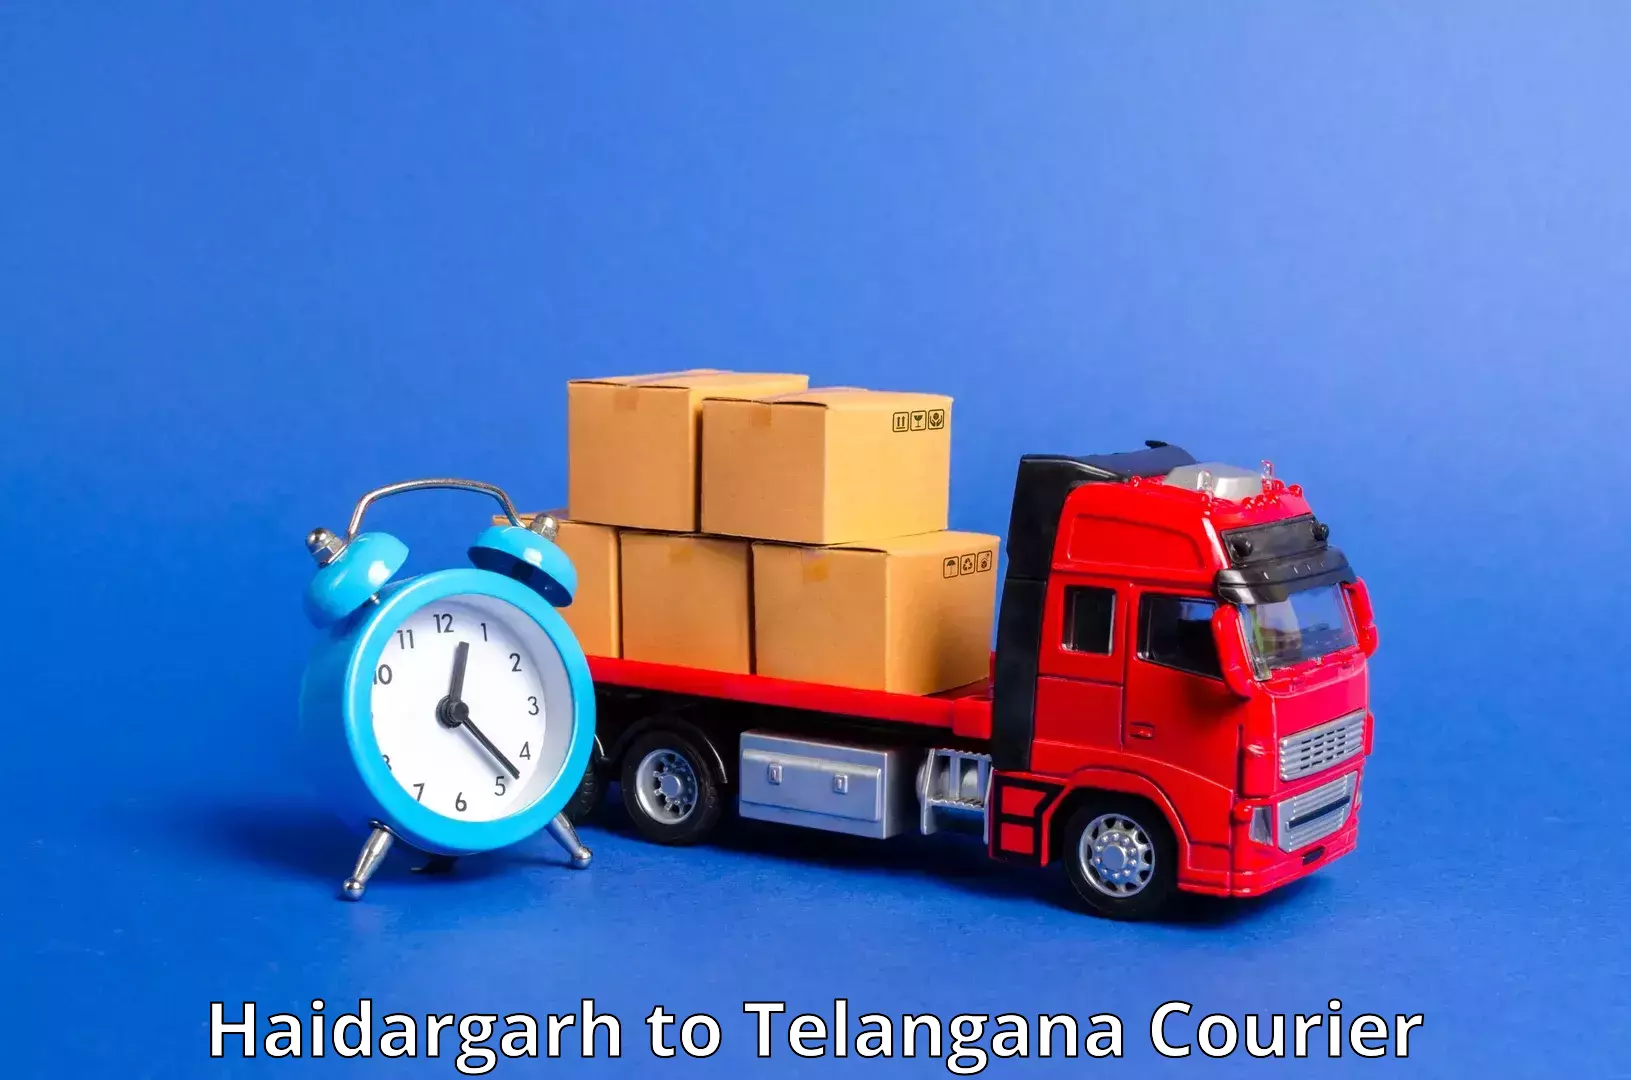 Express delivery capabilities Haidargarh to Sadashivpet